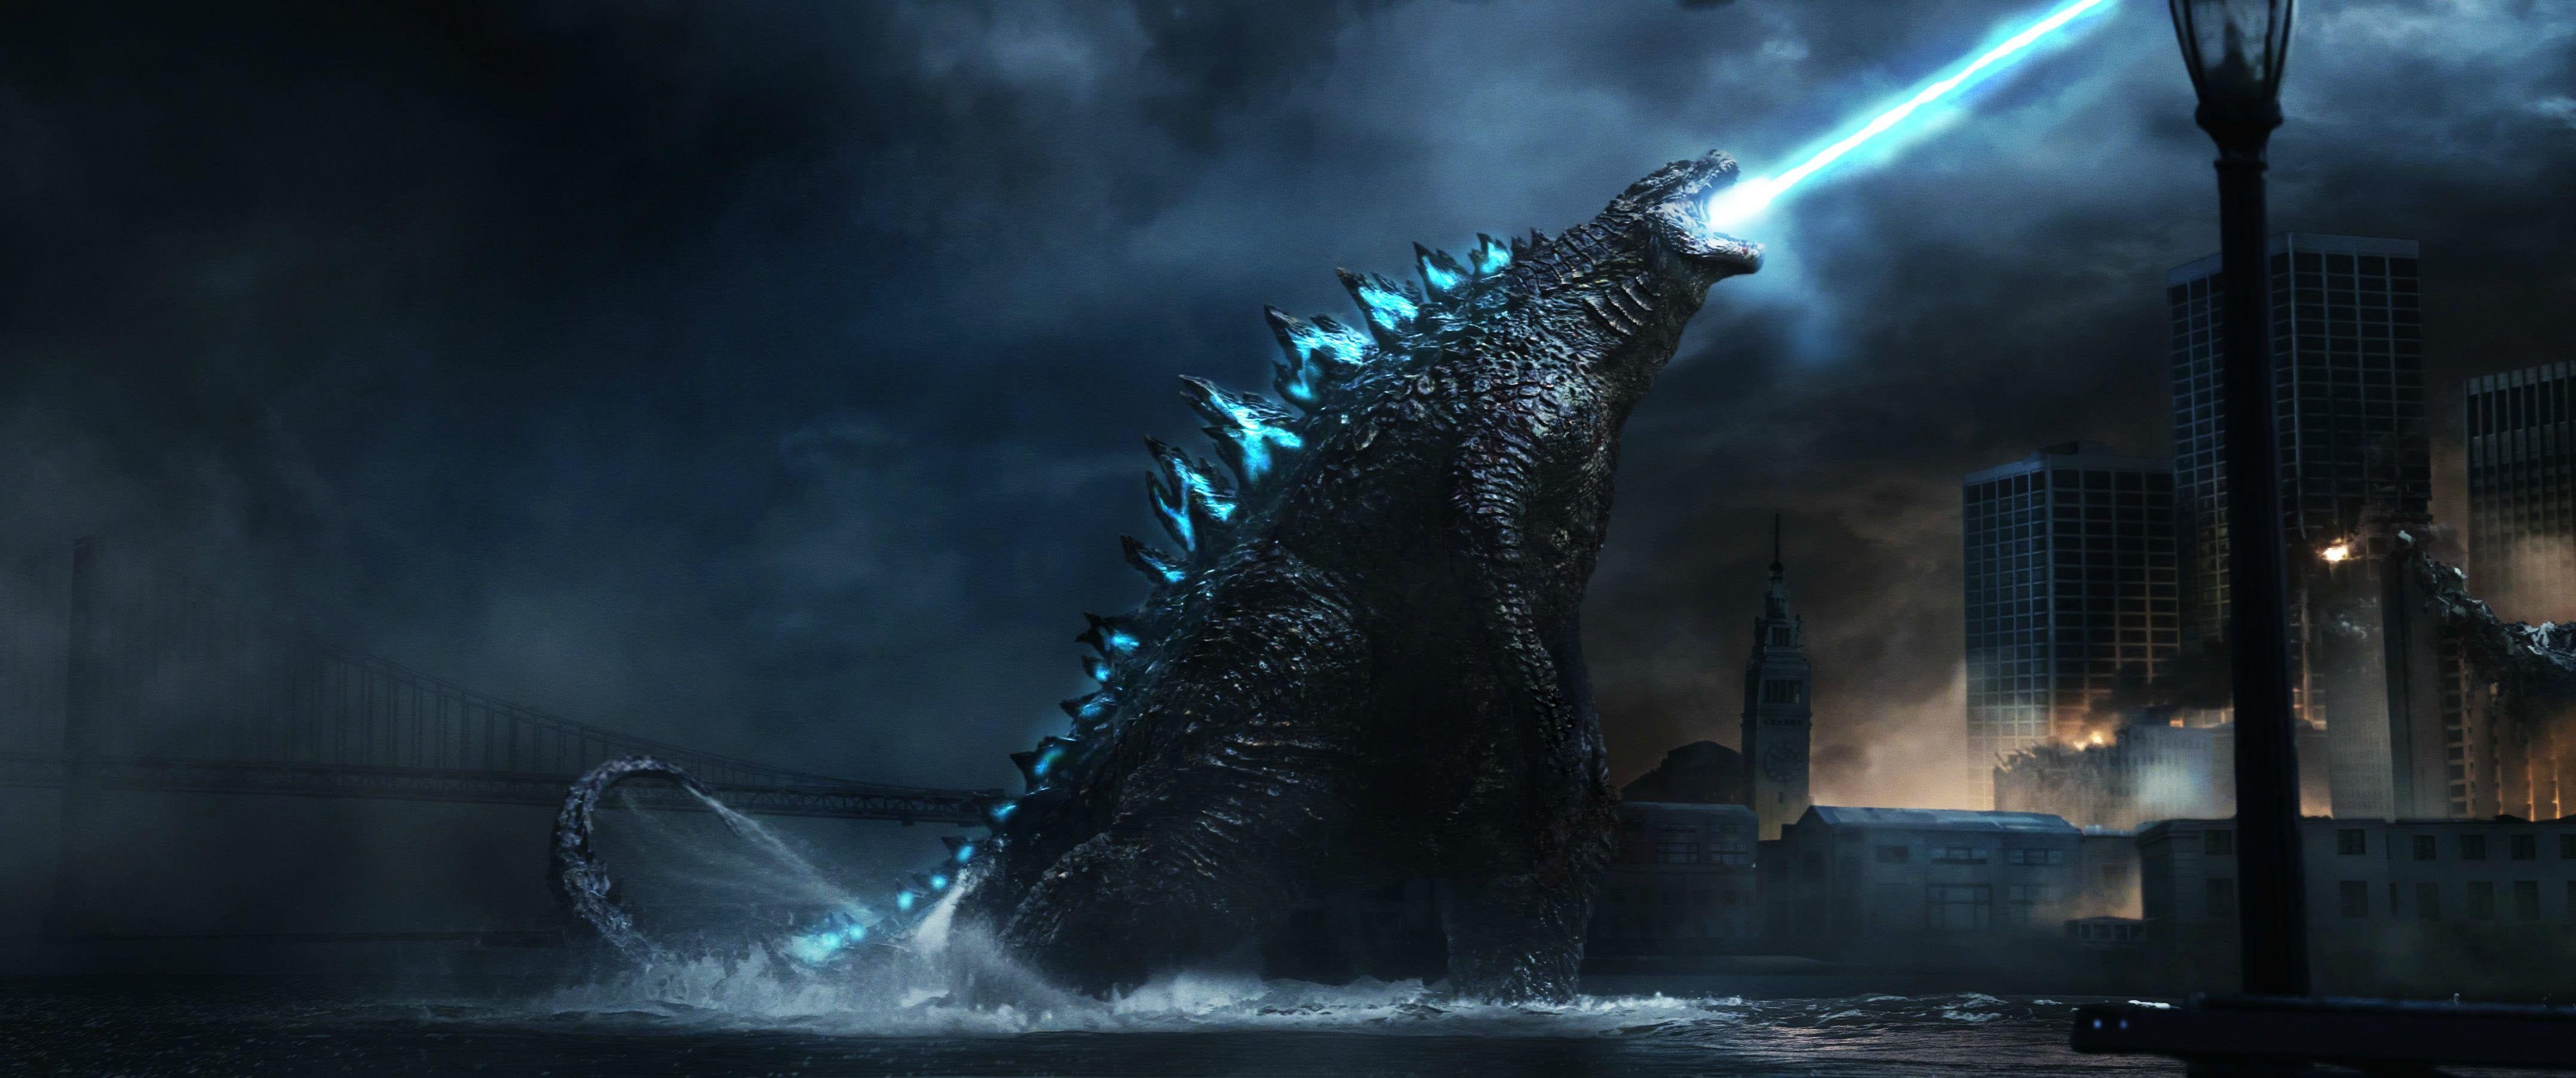 Godzilla 2014 Atomic Breath Photohop